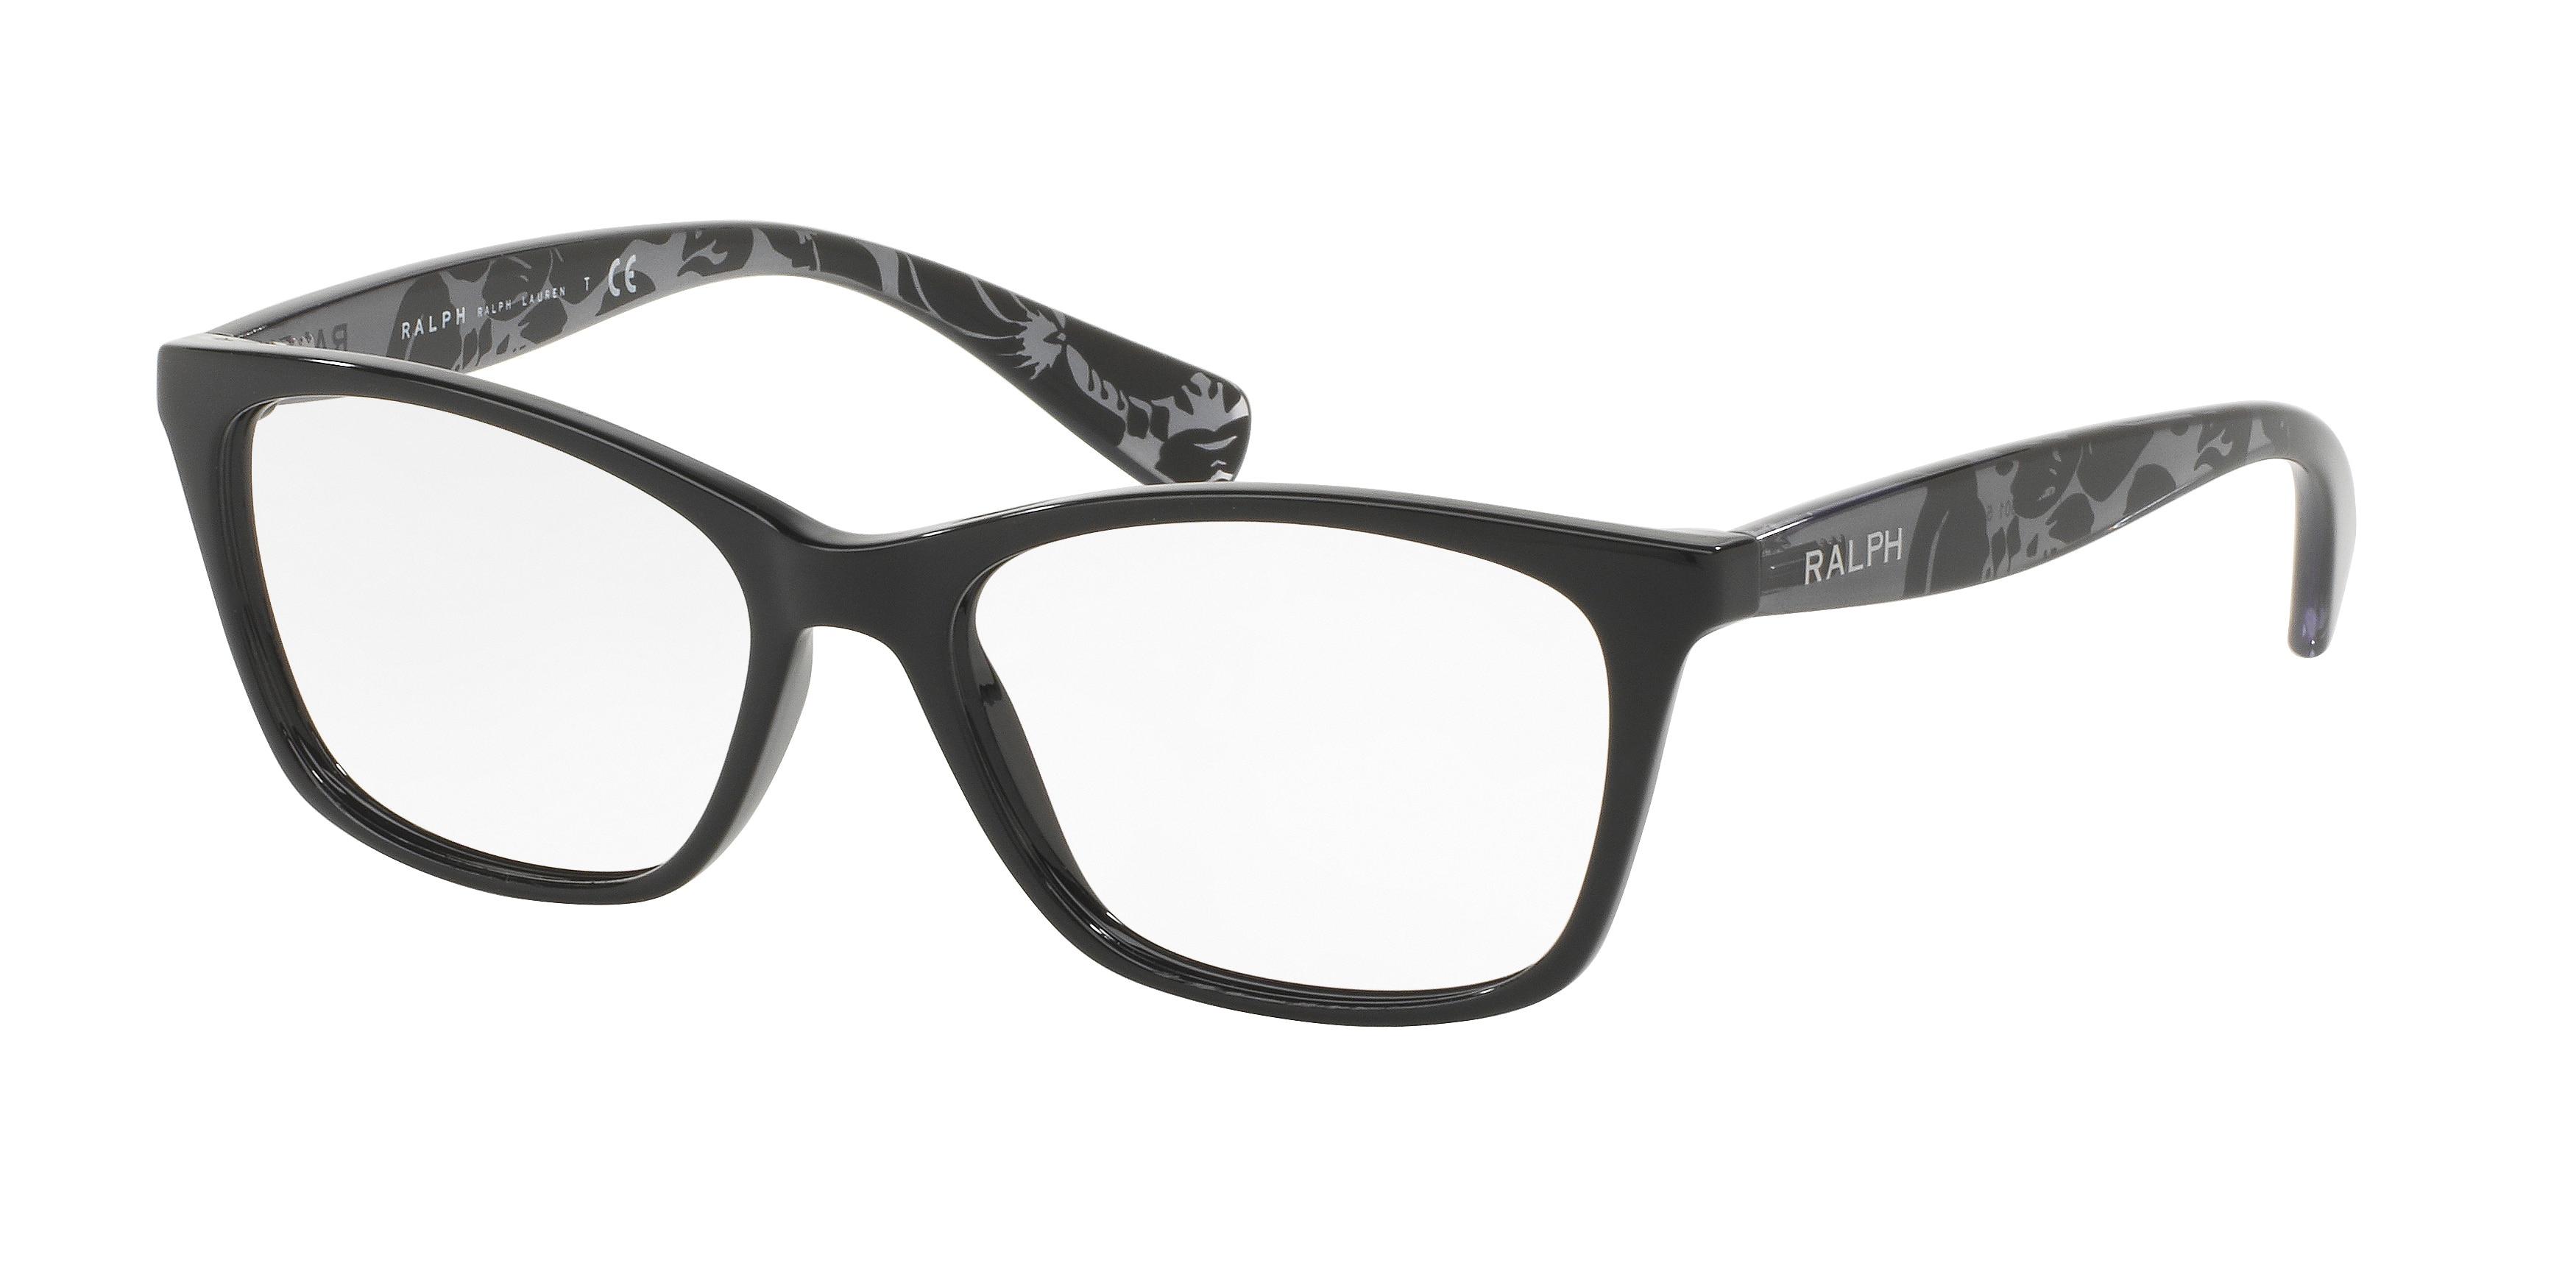 Buy Ralph Lauren Eyeglasses directly from OpticsFast.com